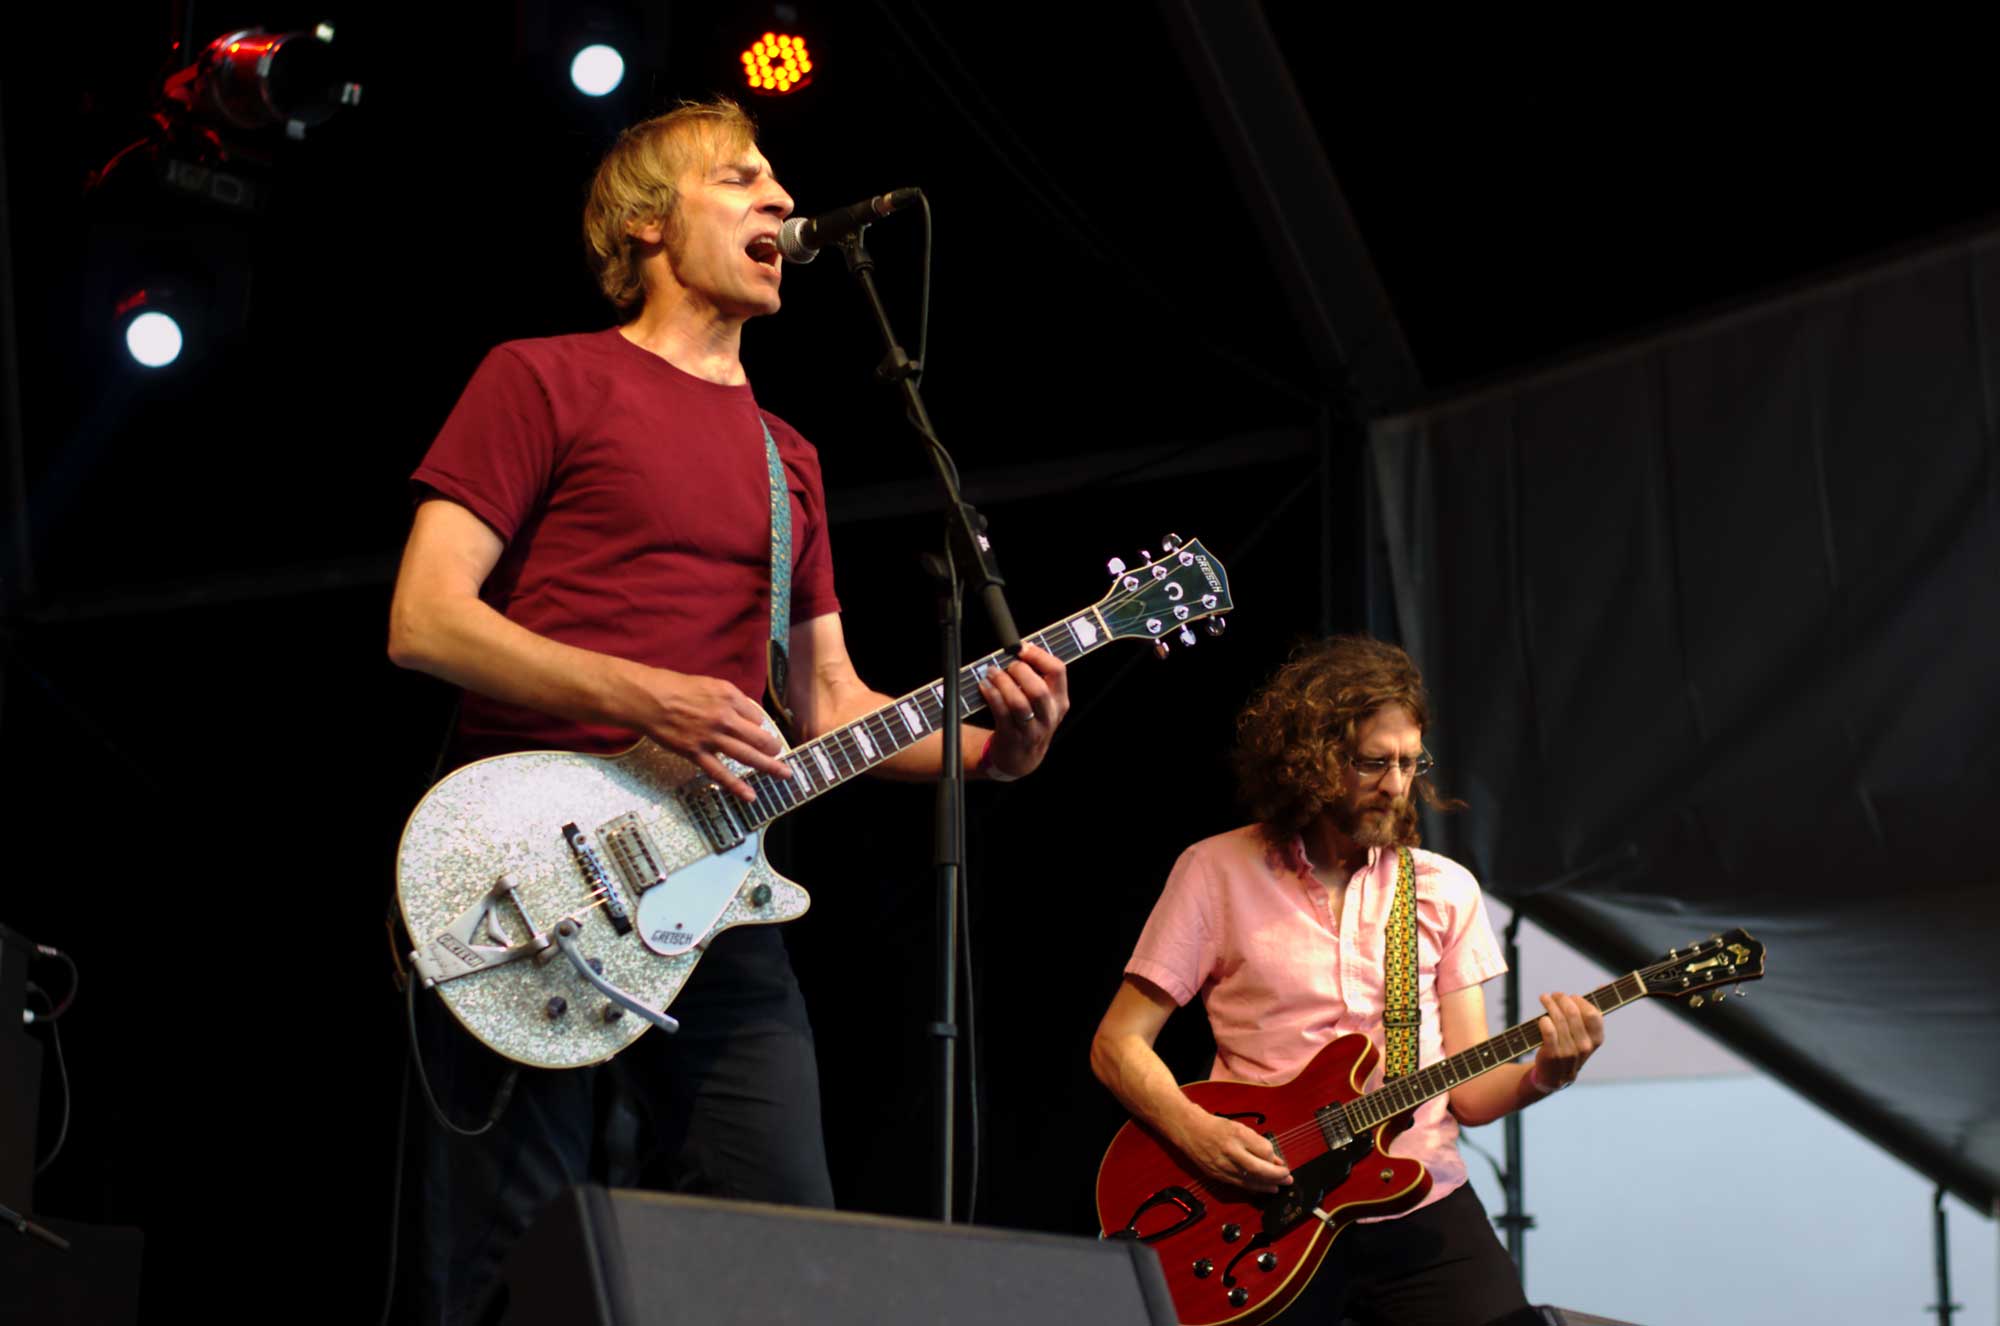 El grup nord-americà Mudhoney actuant al Festival Primavera Sound 2016 a la plaça Joan Coromines